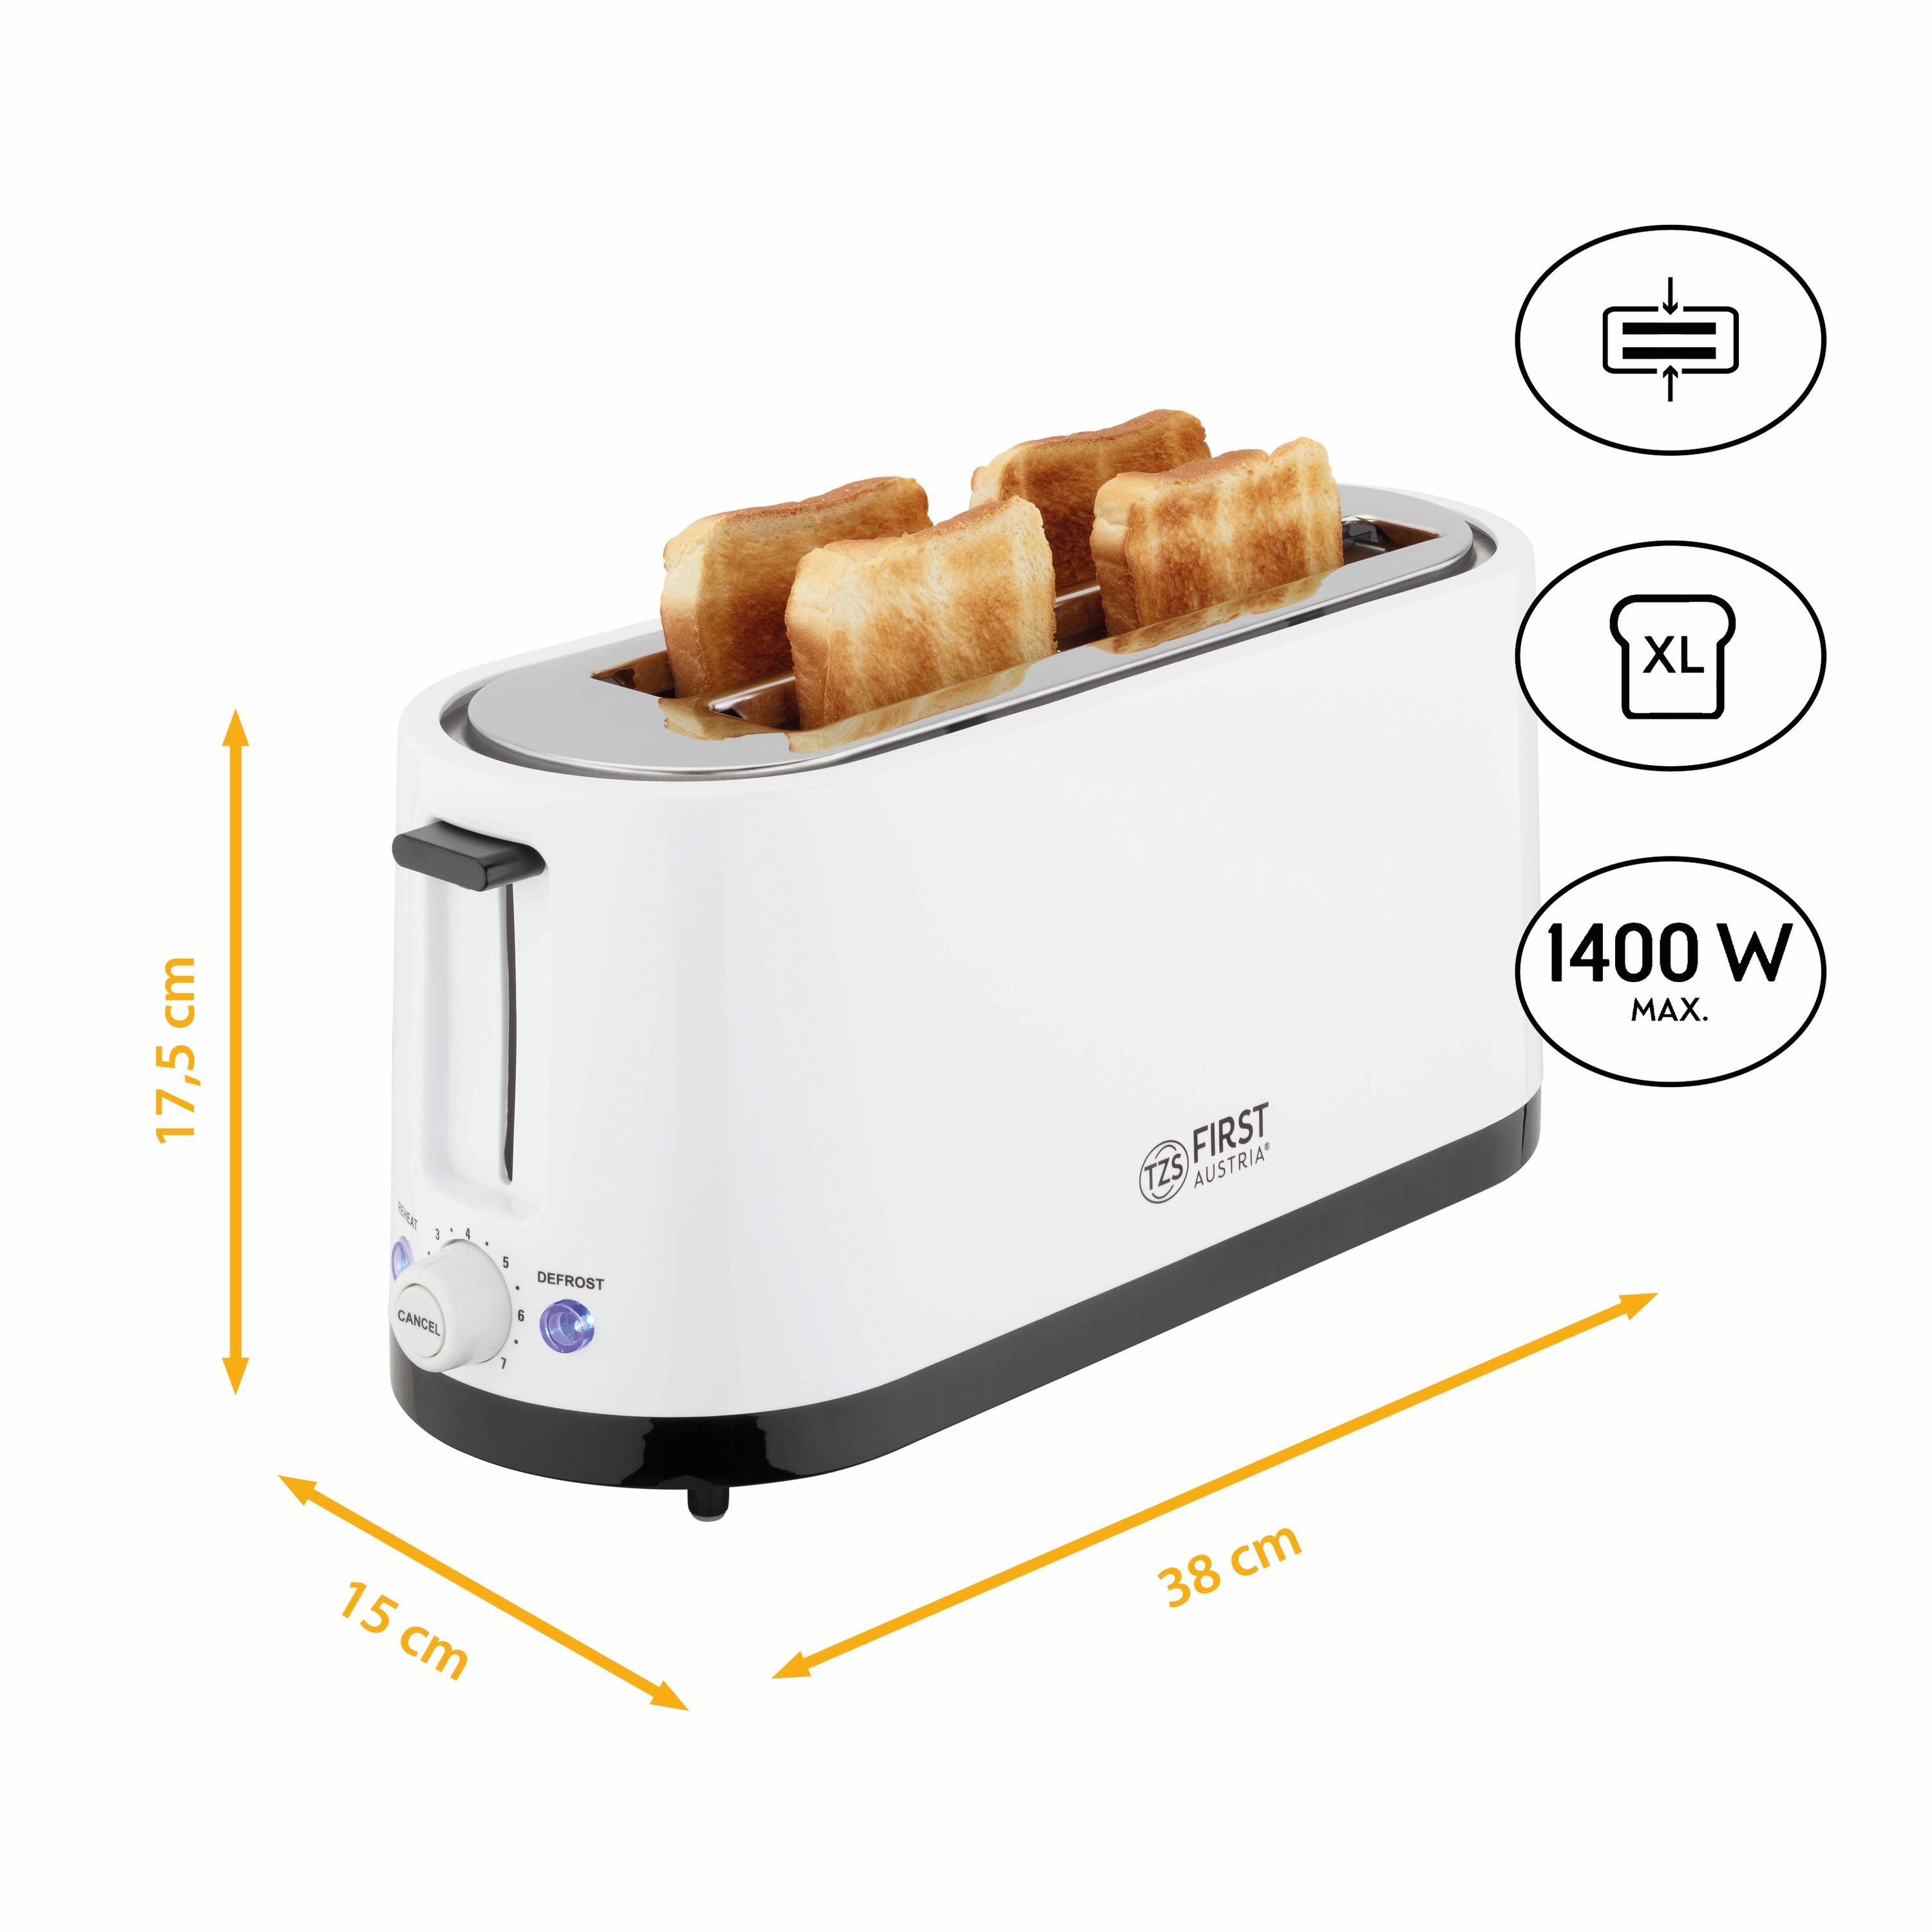 TZS FIRST AUSTRIA FA-5368-5 Toaster (1400 Schlitze: 4) Weiß Watt